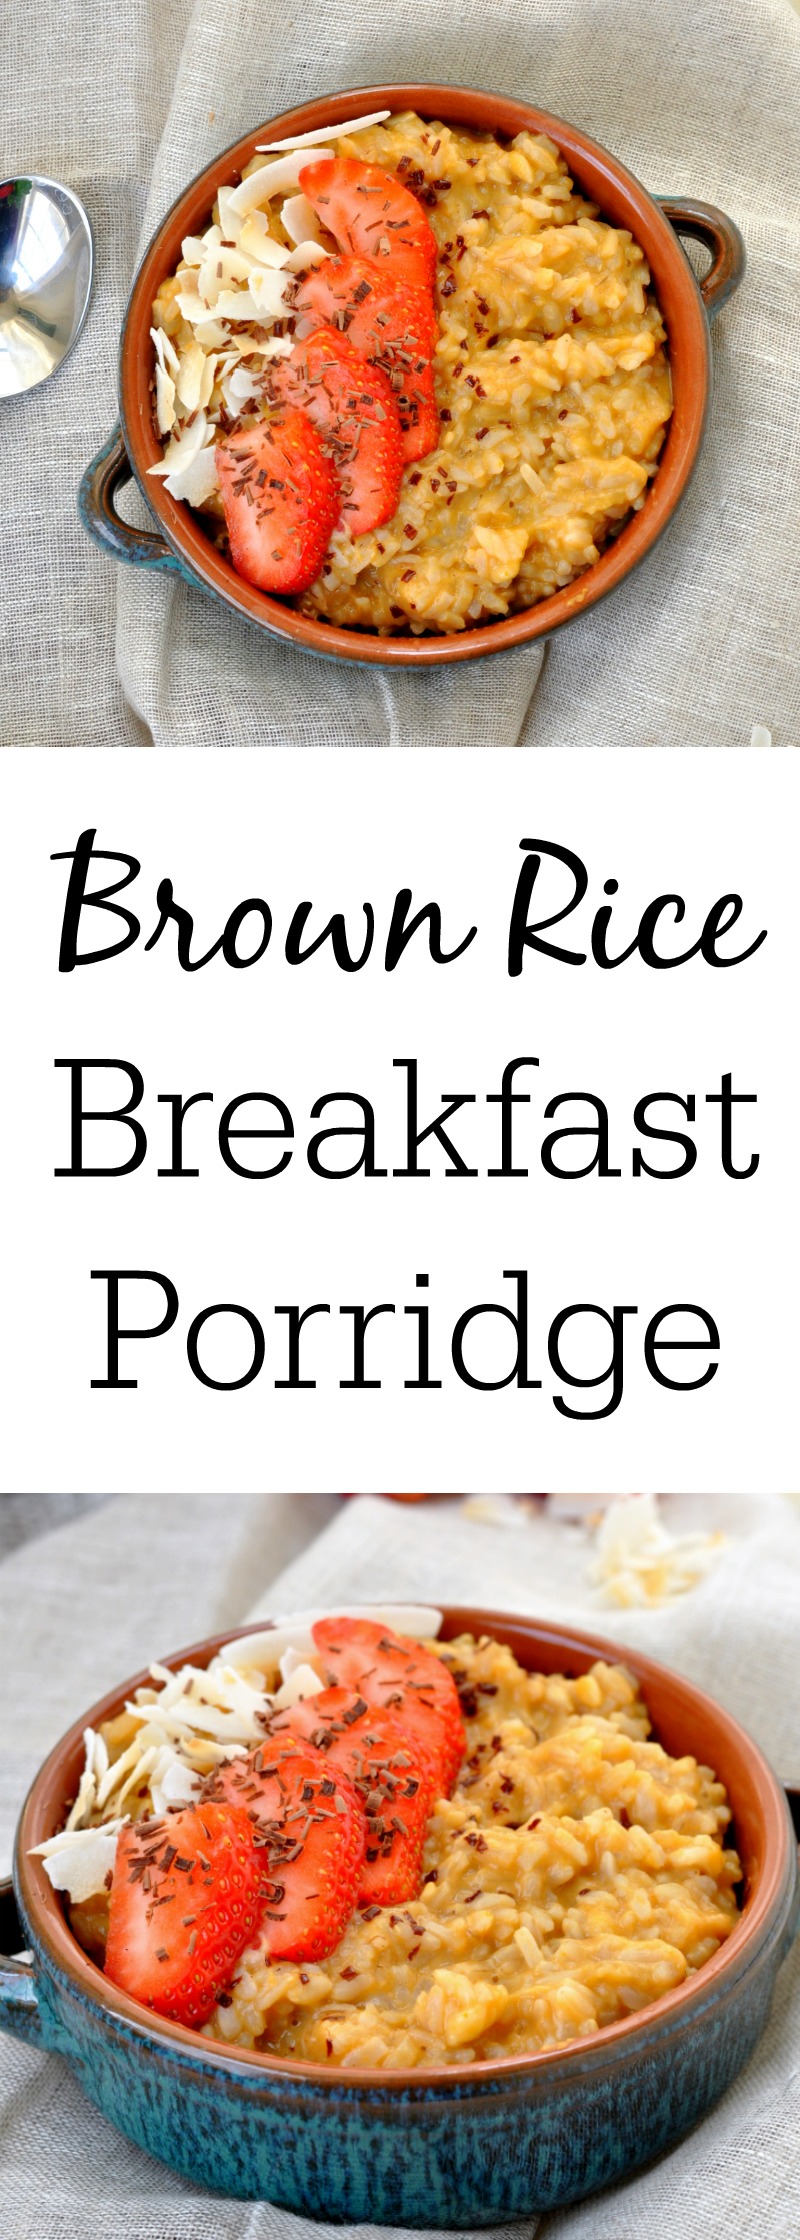 Brown Rice Breakfast Porridge photo collage